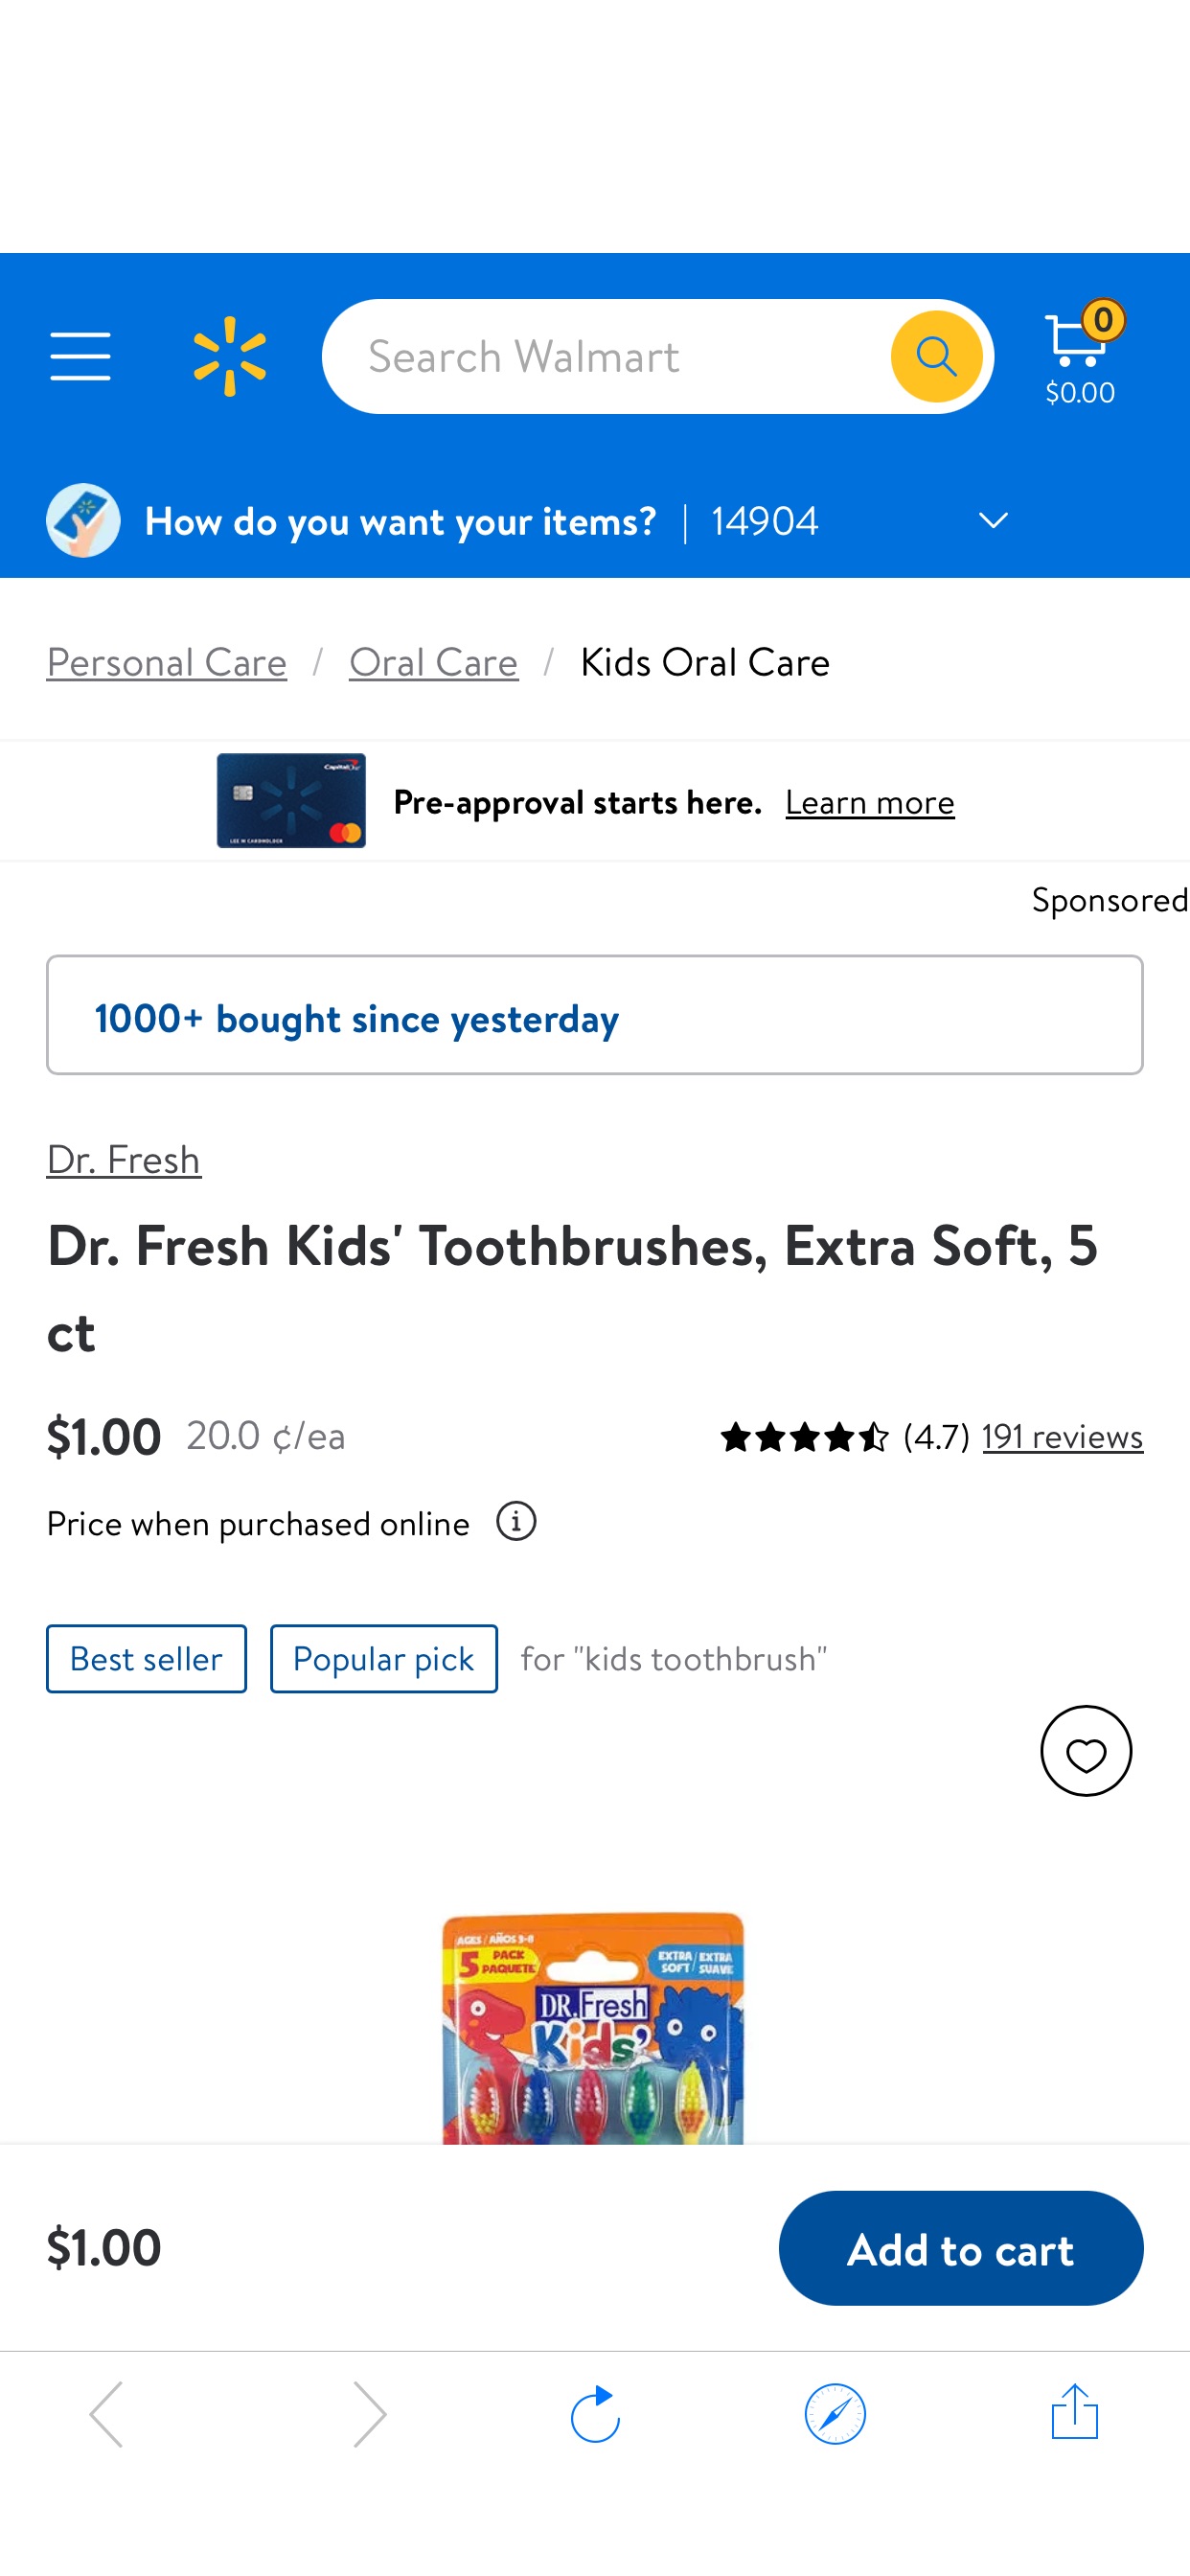 Dr. Fresh Kids' Toothbrushes, Extra Soft, 5 ct - Walmart.com